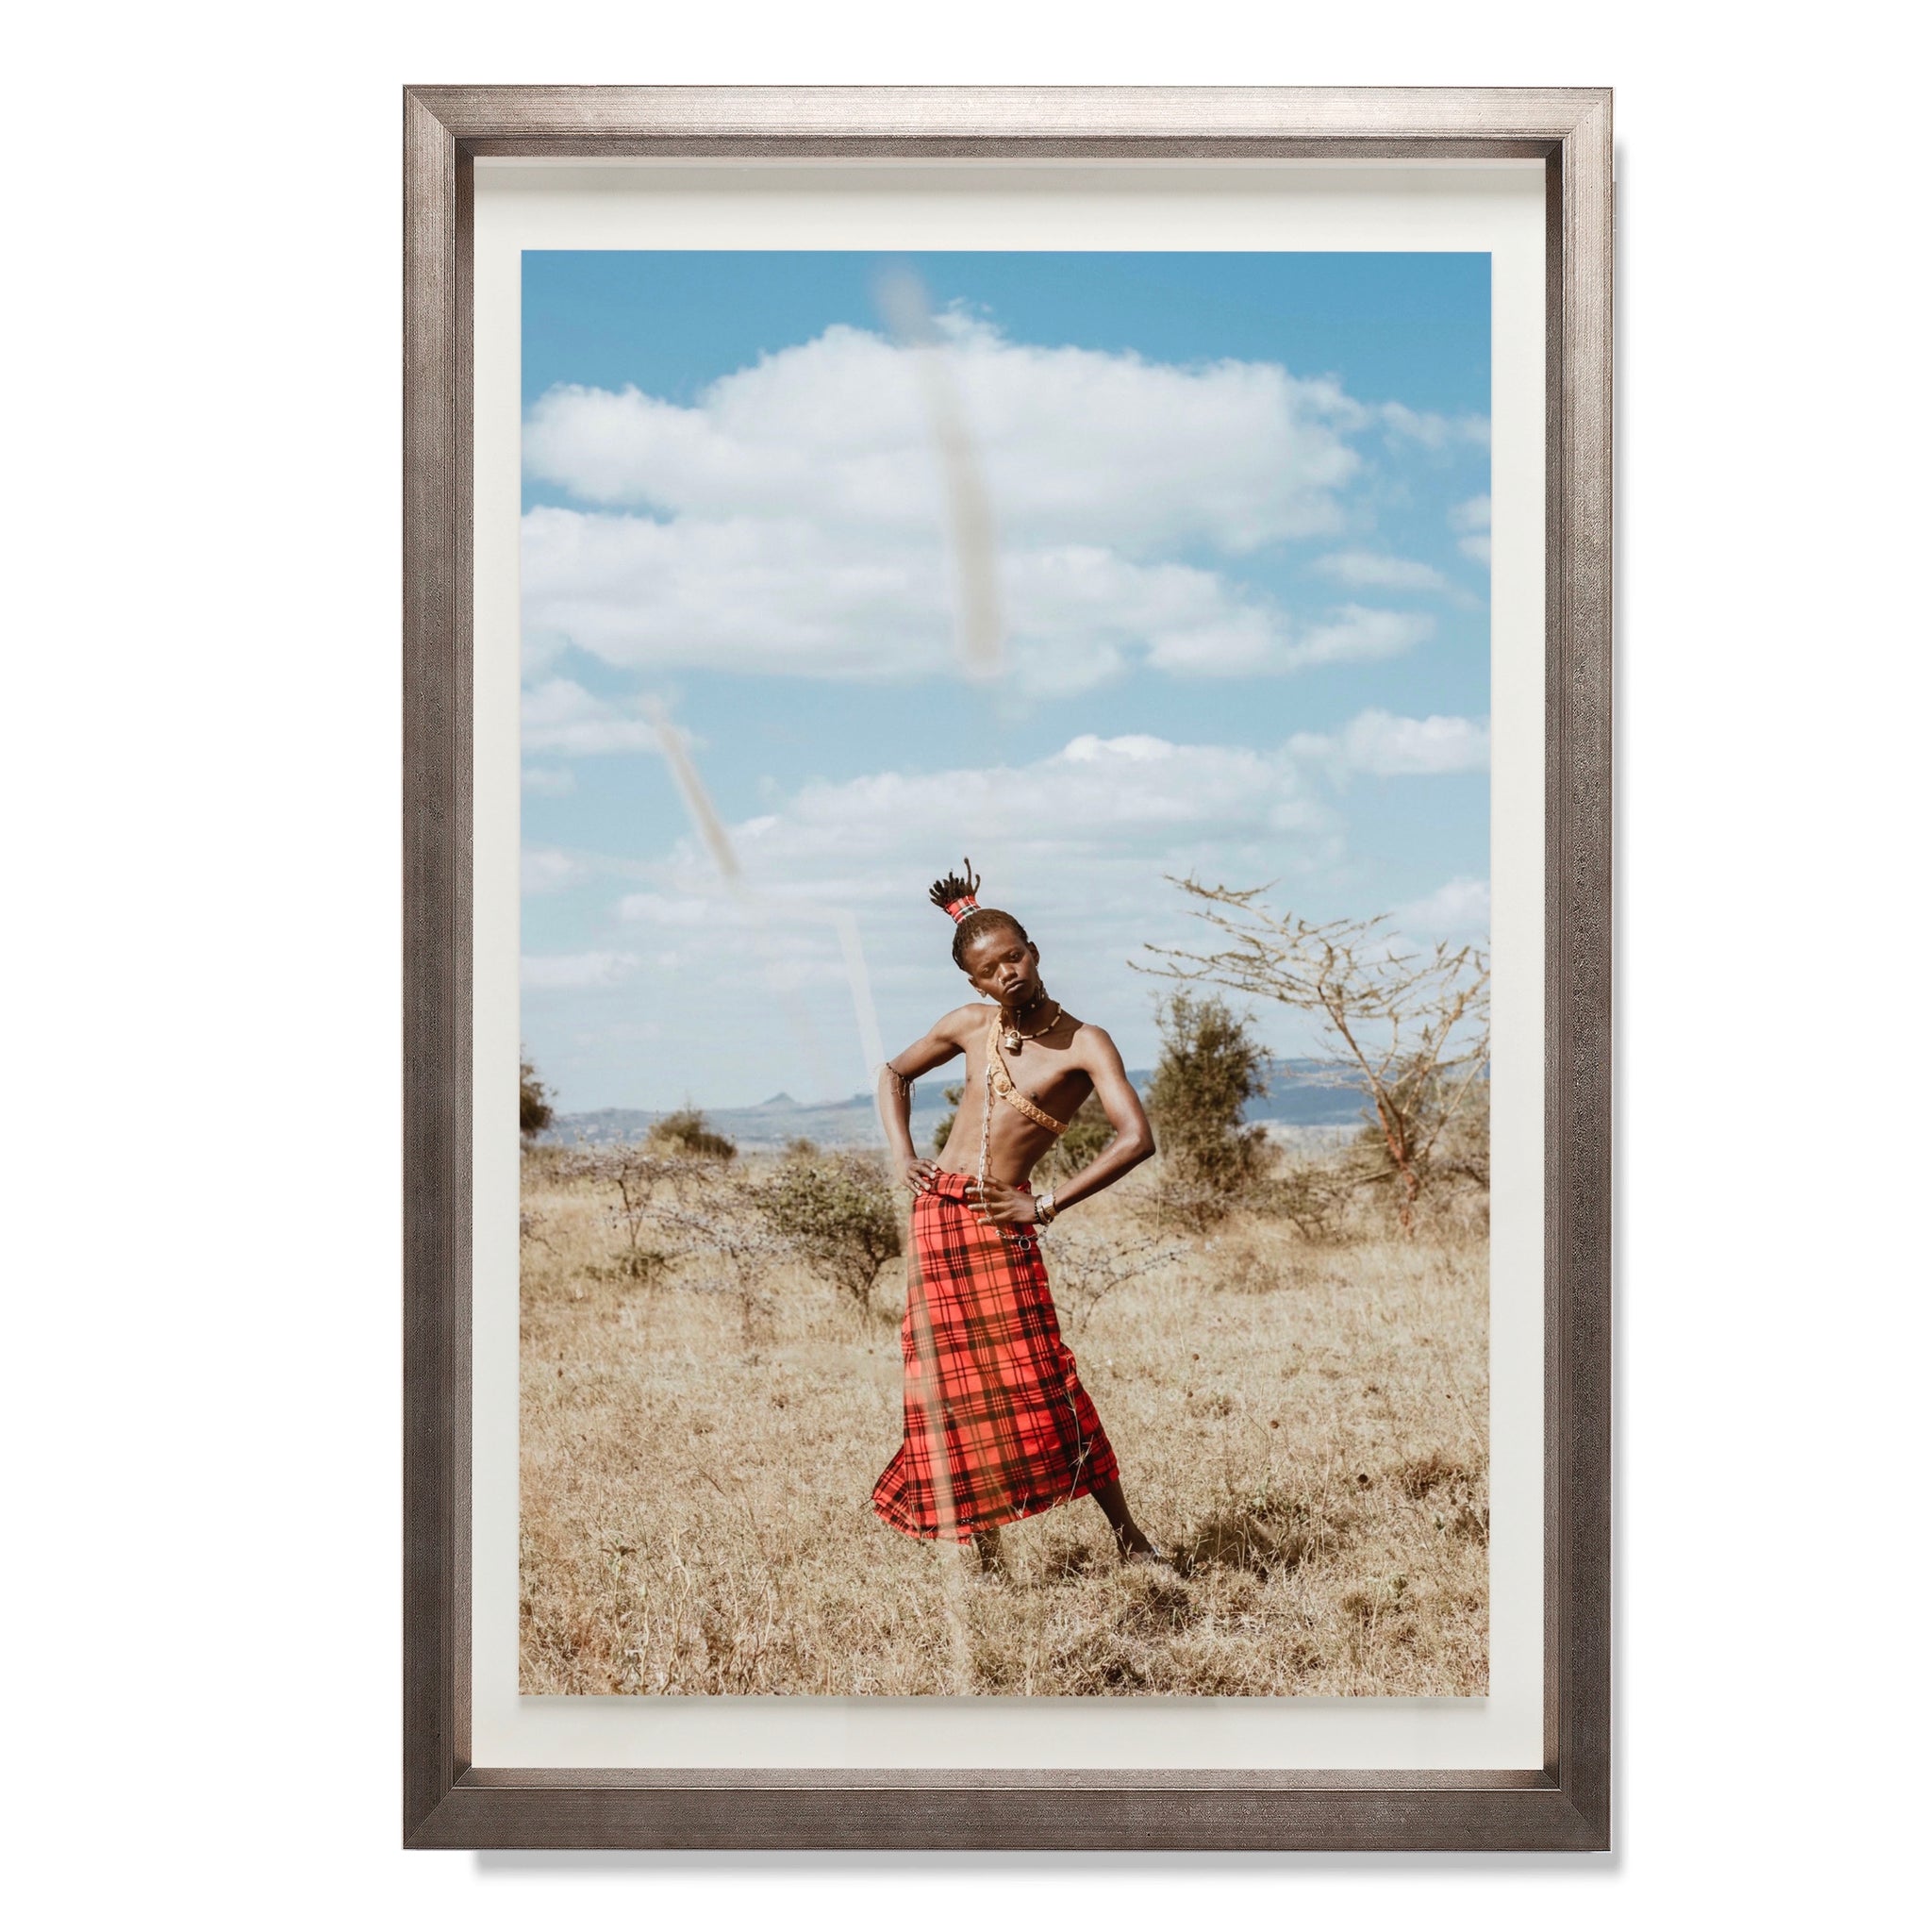 The Cool Maasai 5